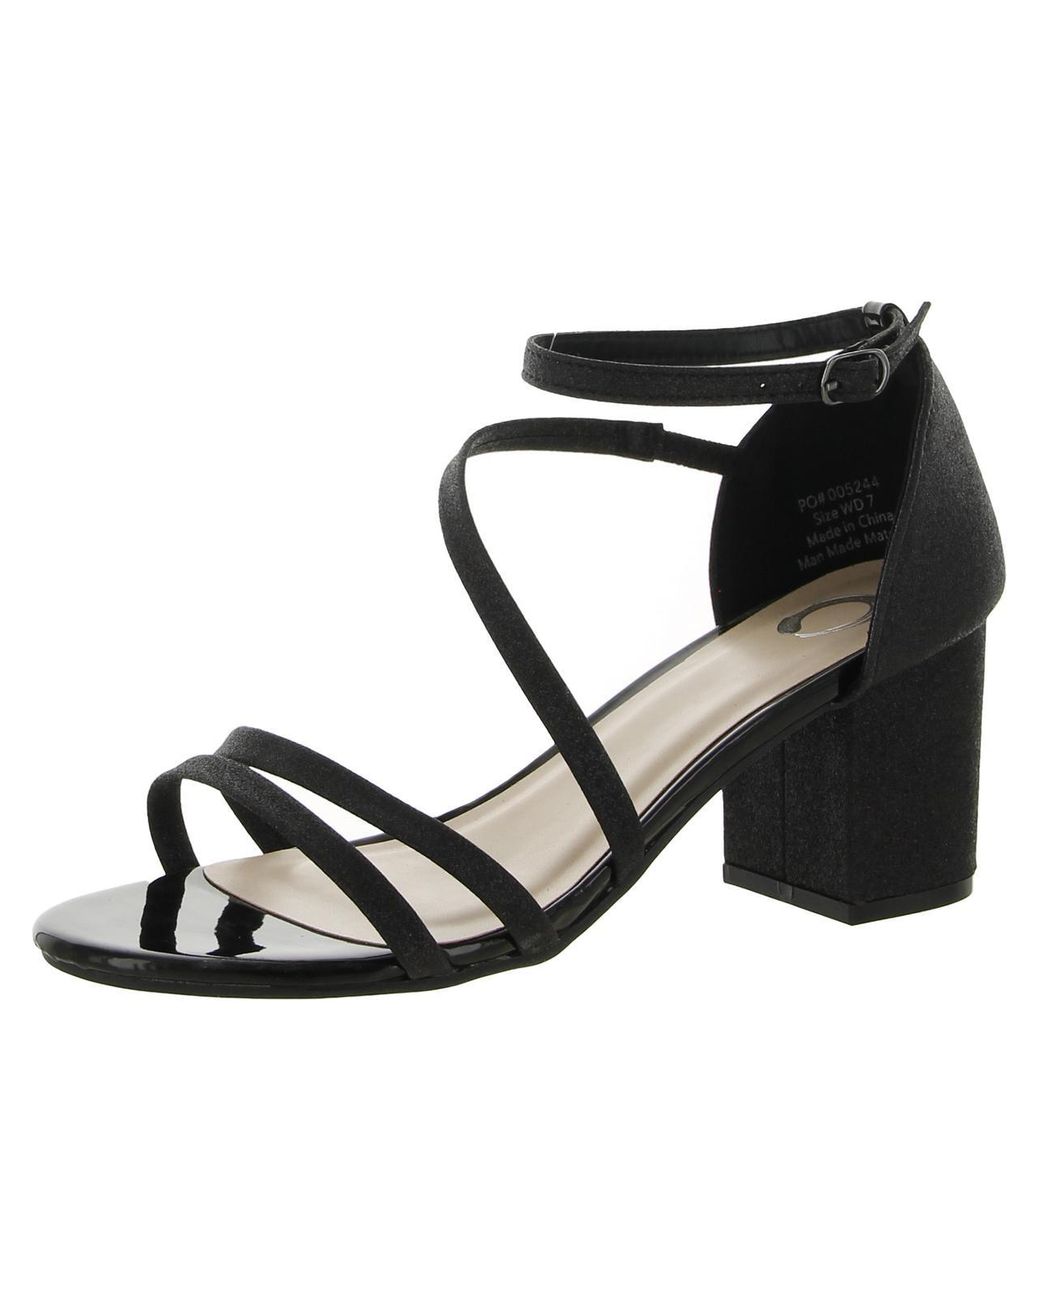 Journee Collection Open Toe Ankle Strap Heels in Black | Lyst